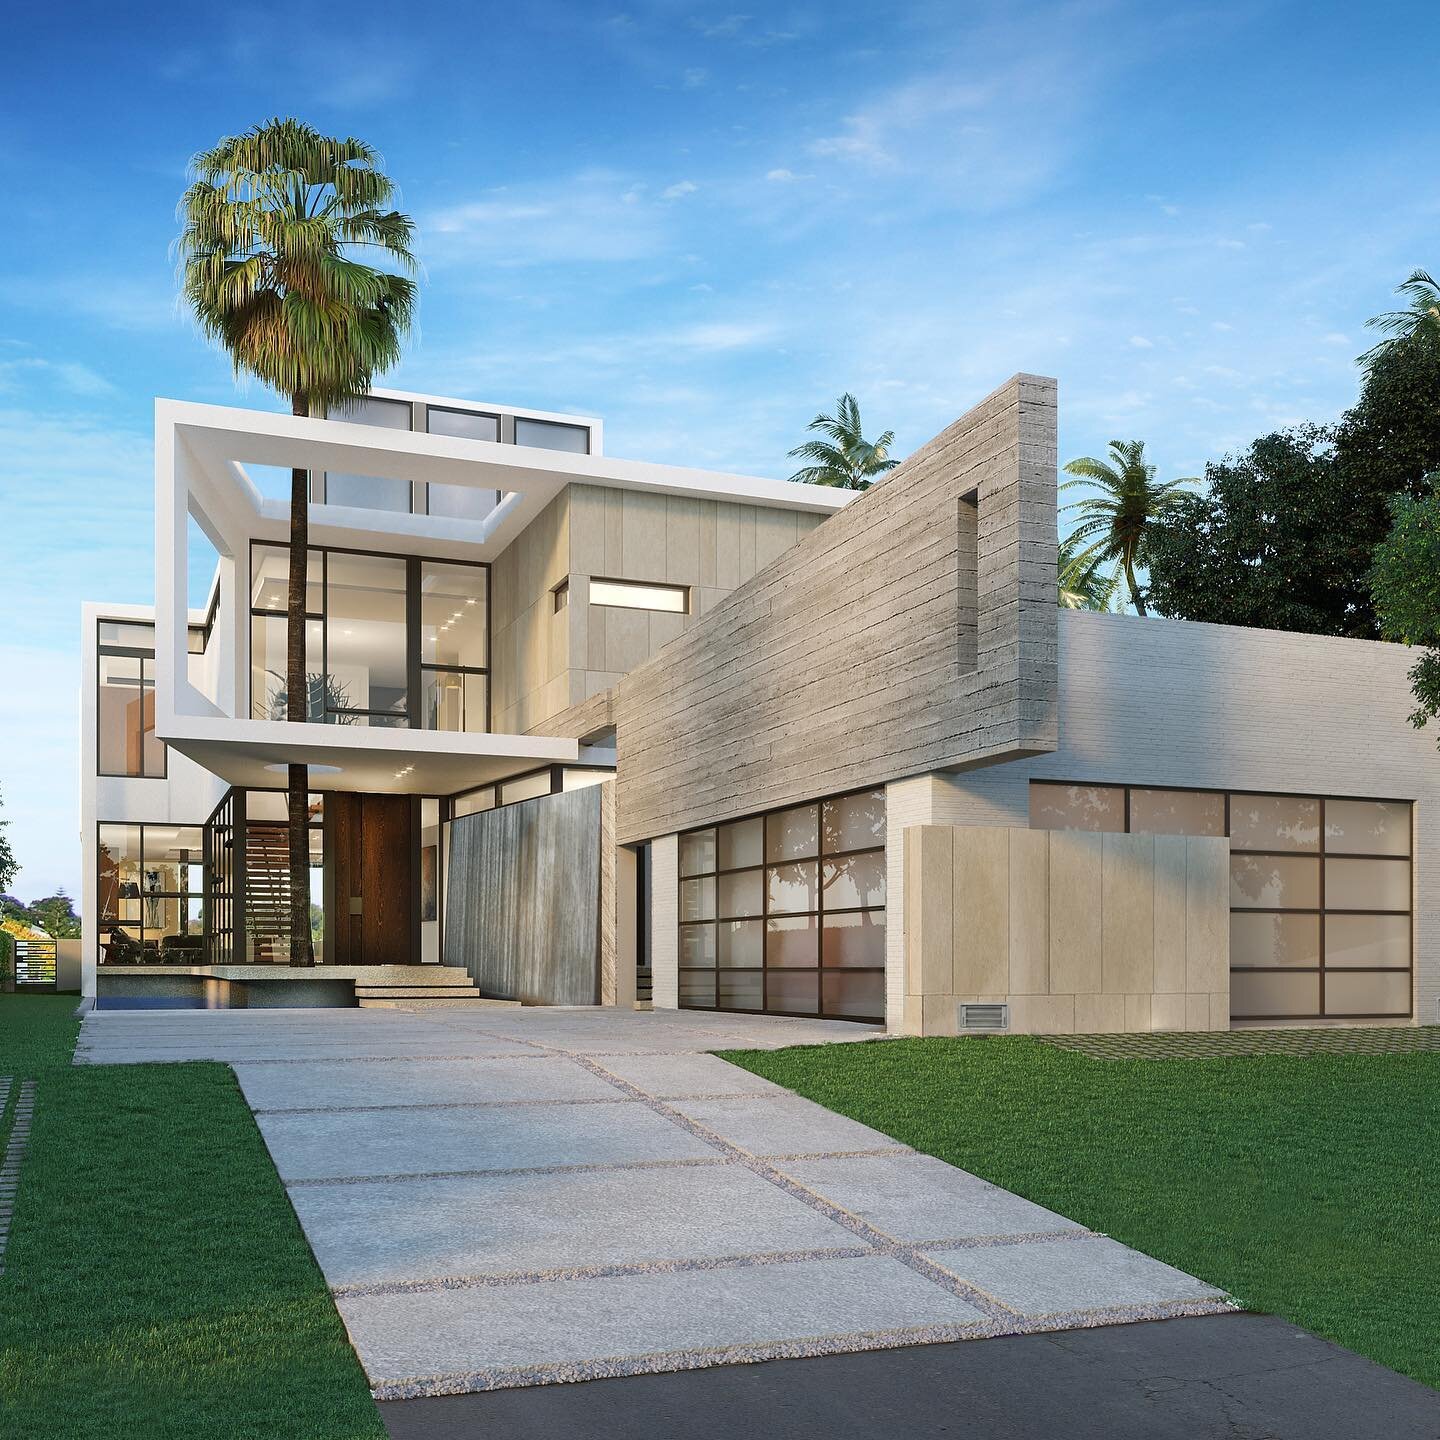 Casa Palma Residence ready to go! 
@miamibeach #luxurylifestyle #luxuryrealestate #waterfronthomes #miamibeach #miamibeachrealestate #venitianisles @boges_architects